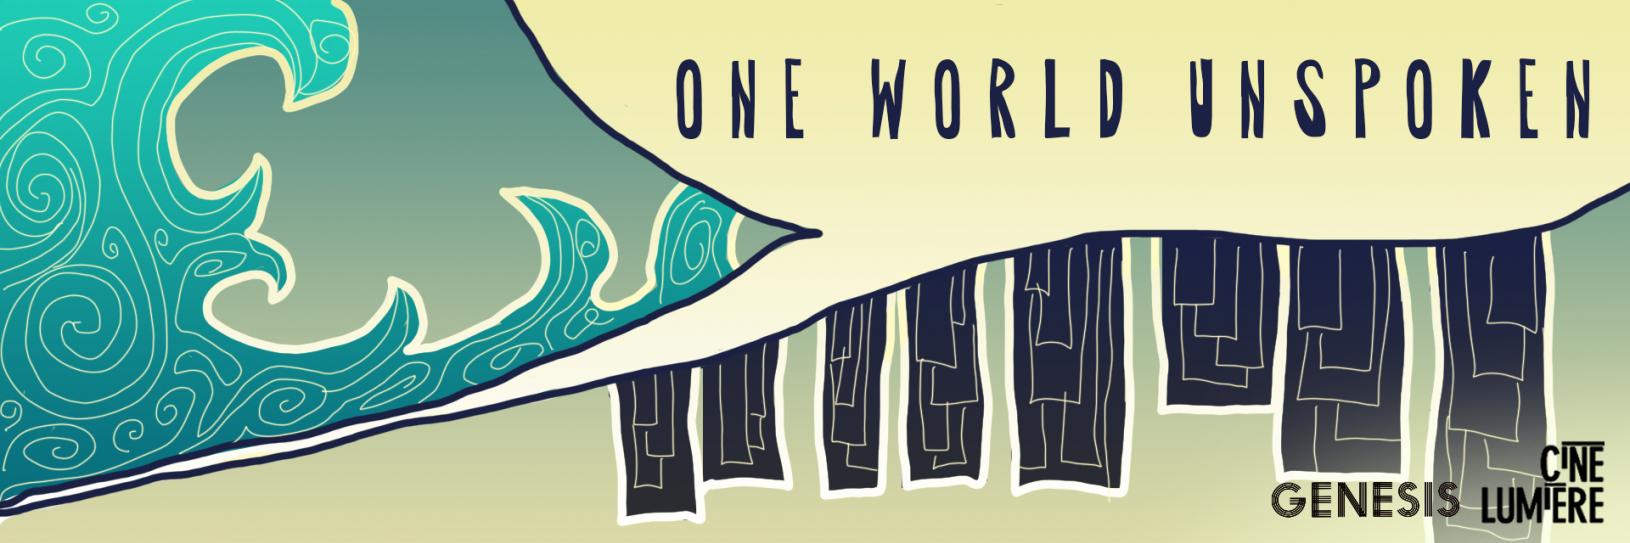 One World Unspoken Season artwork